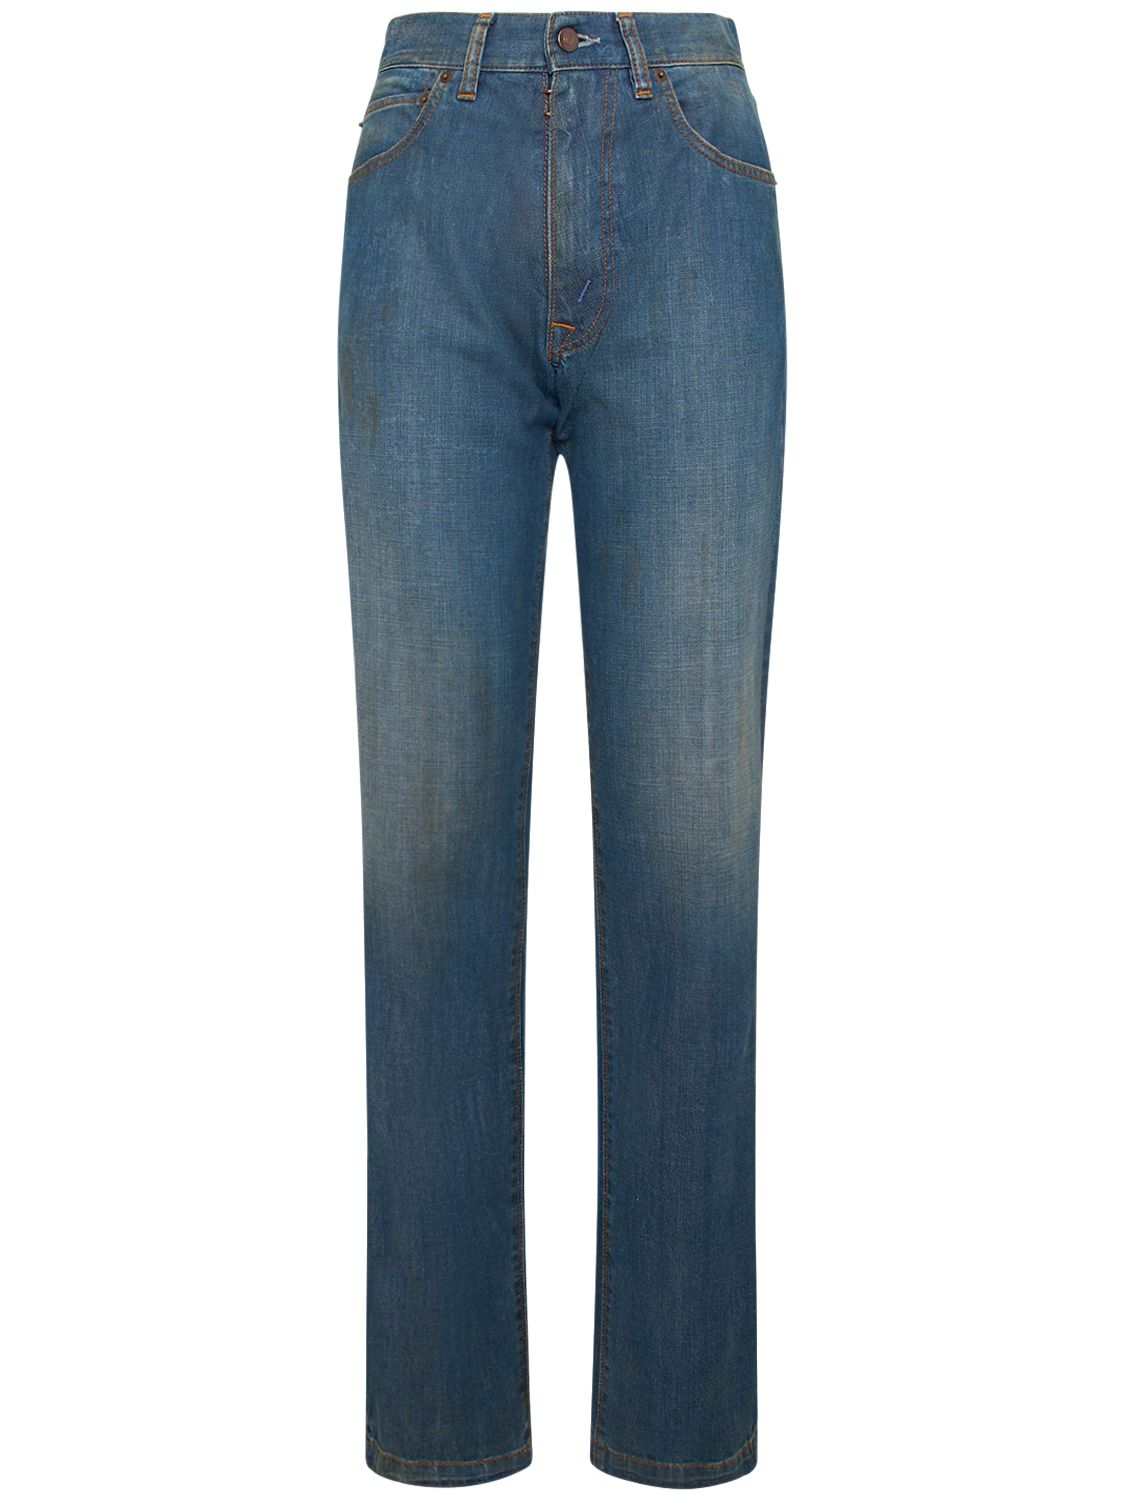 Five Pocket Straight Denim Jeans